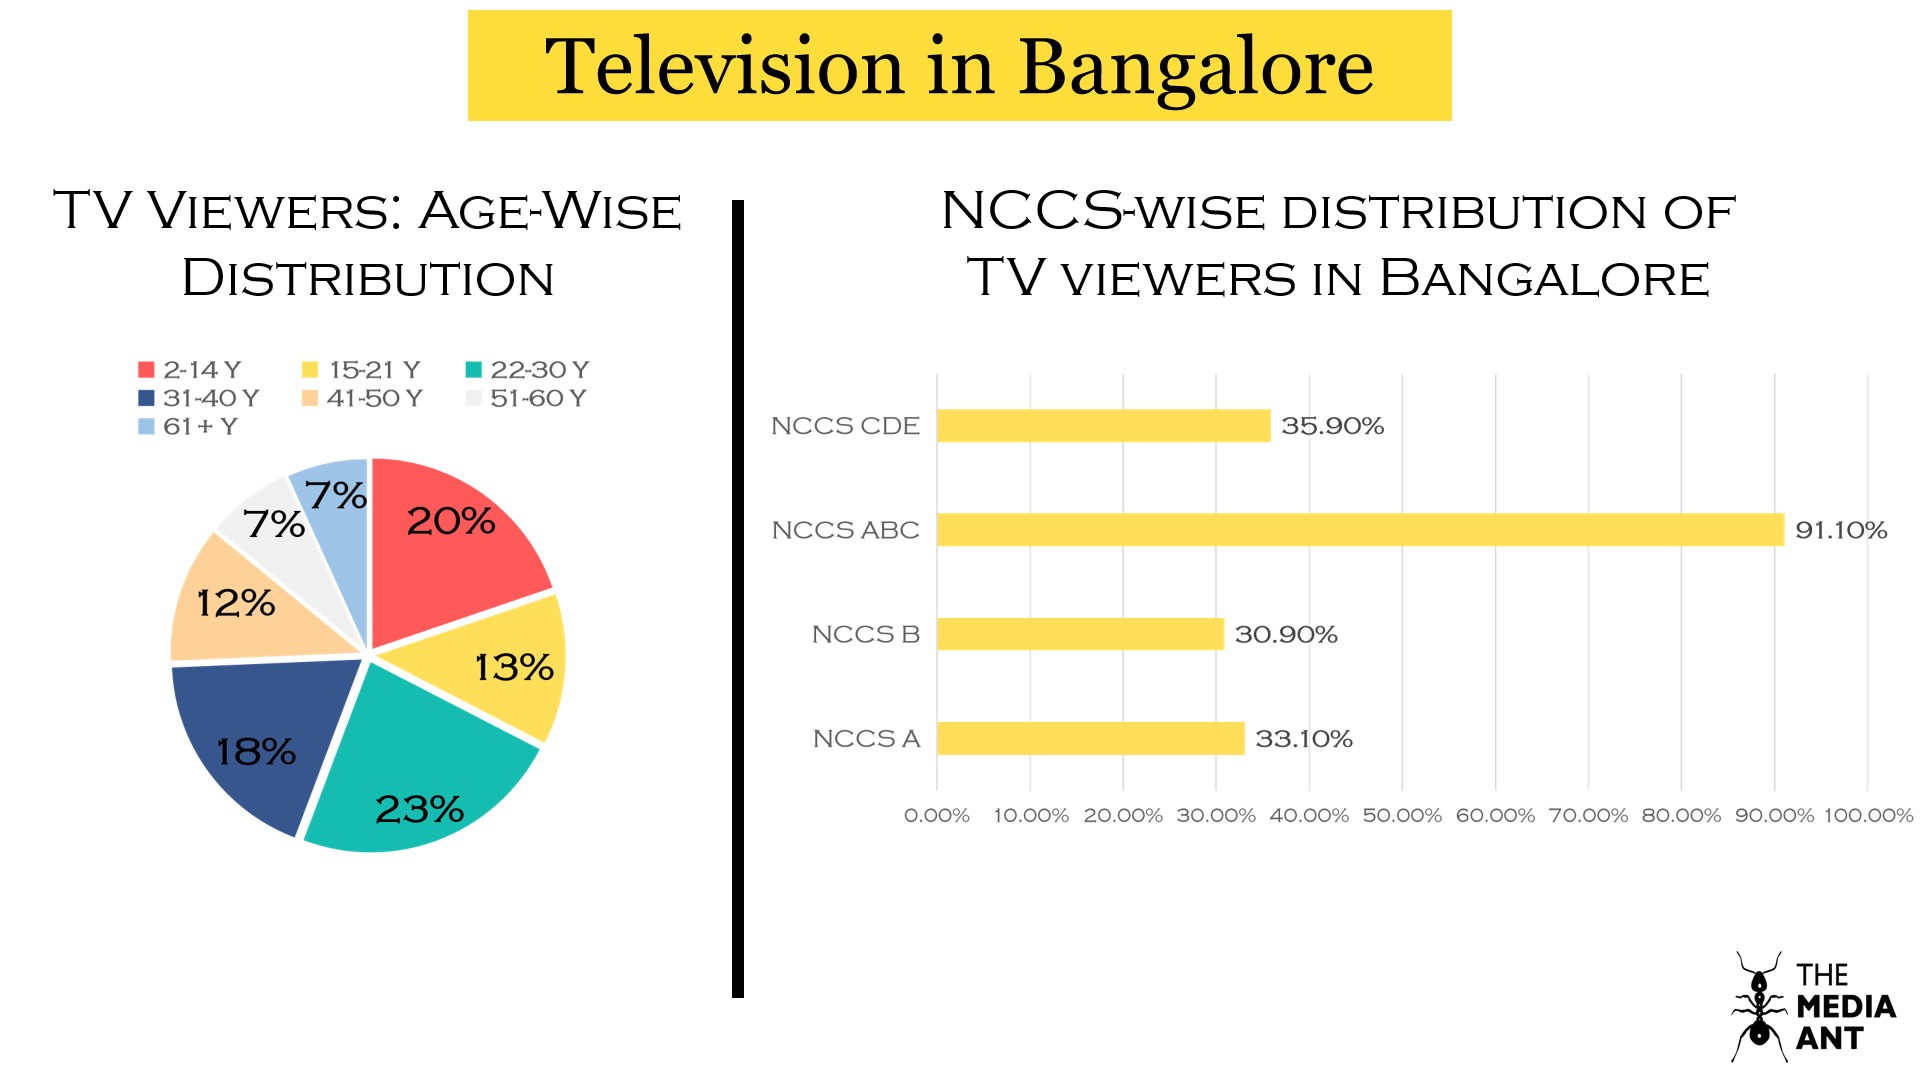 Television viewership in Bangalore